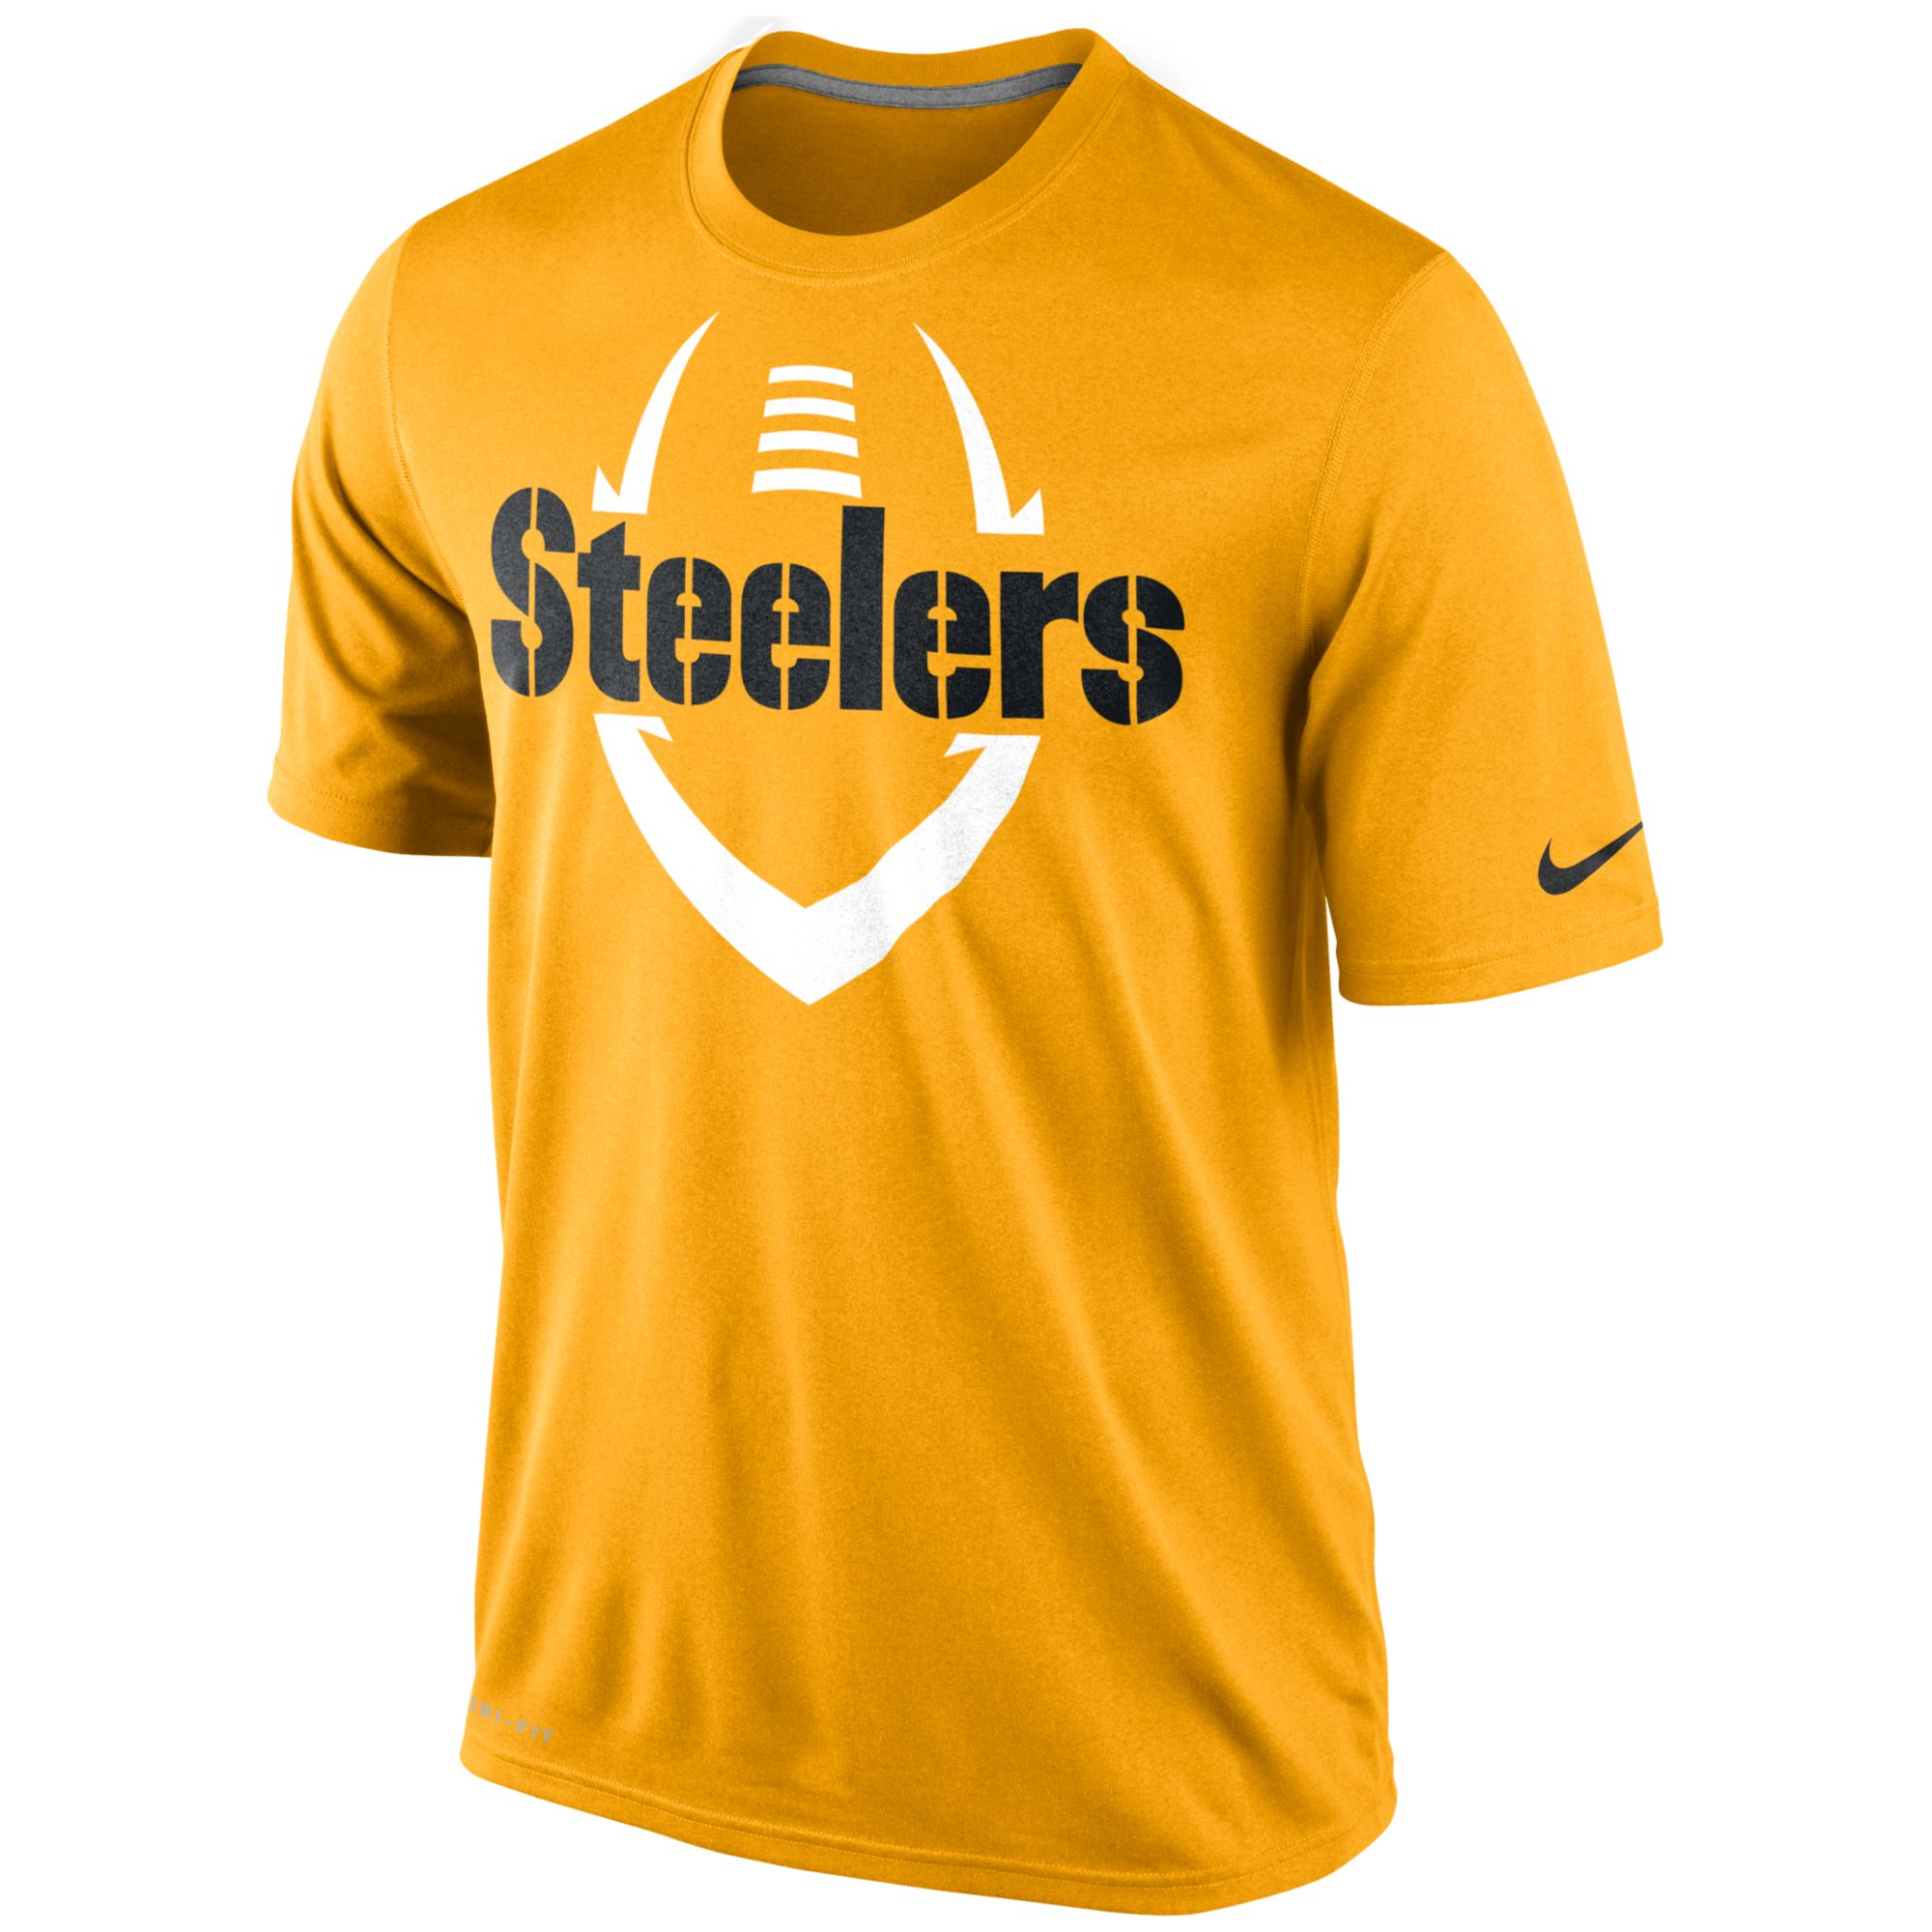 Lyst - Nike Mens Shortsleeve Pittsburgh Steelers Tshirt in Yellow for Men